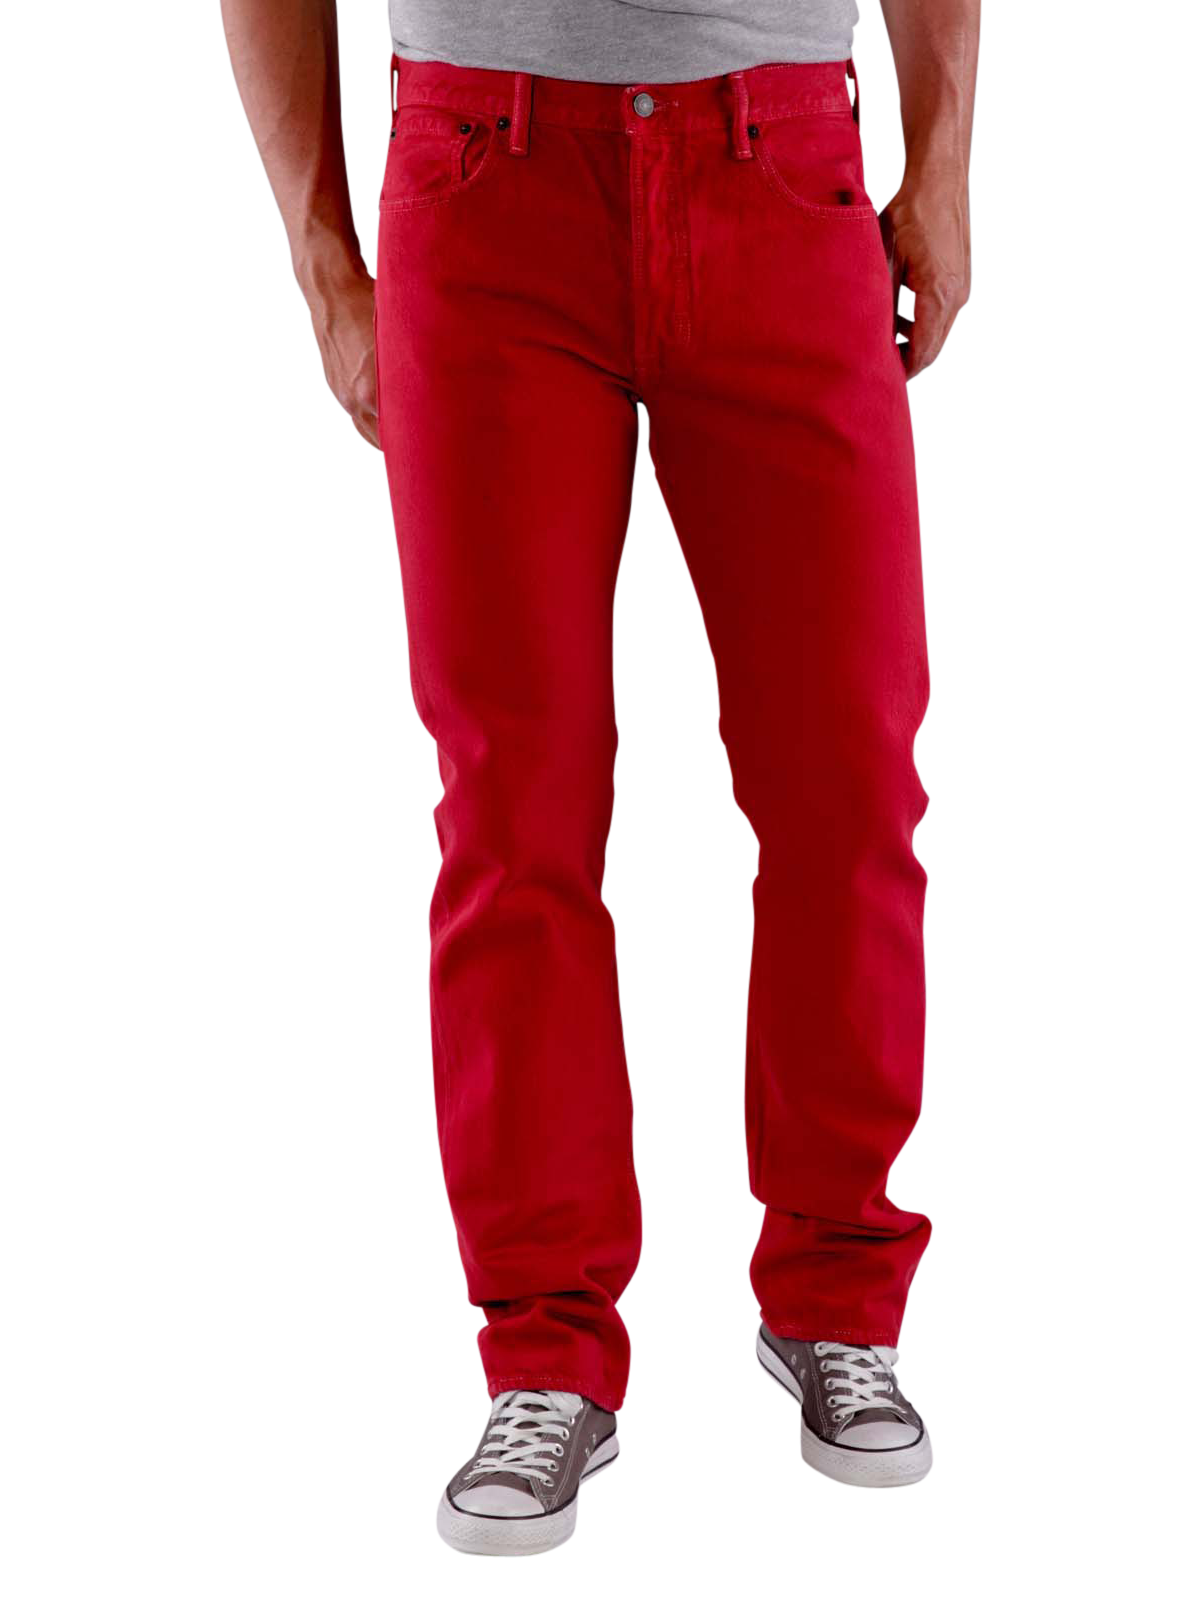 Levi's 501 Jeans jester red - Levi's Men's Jeans - JEANS.CH - Levi's 501 Shorts